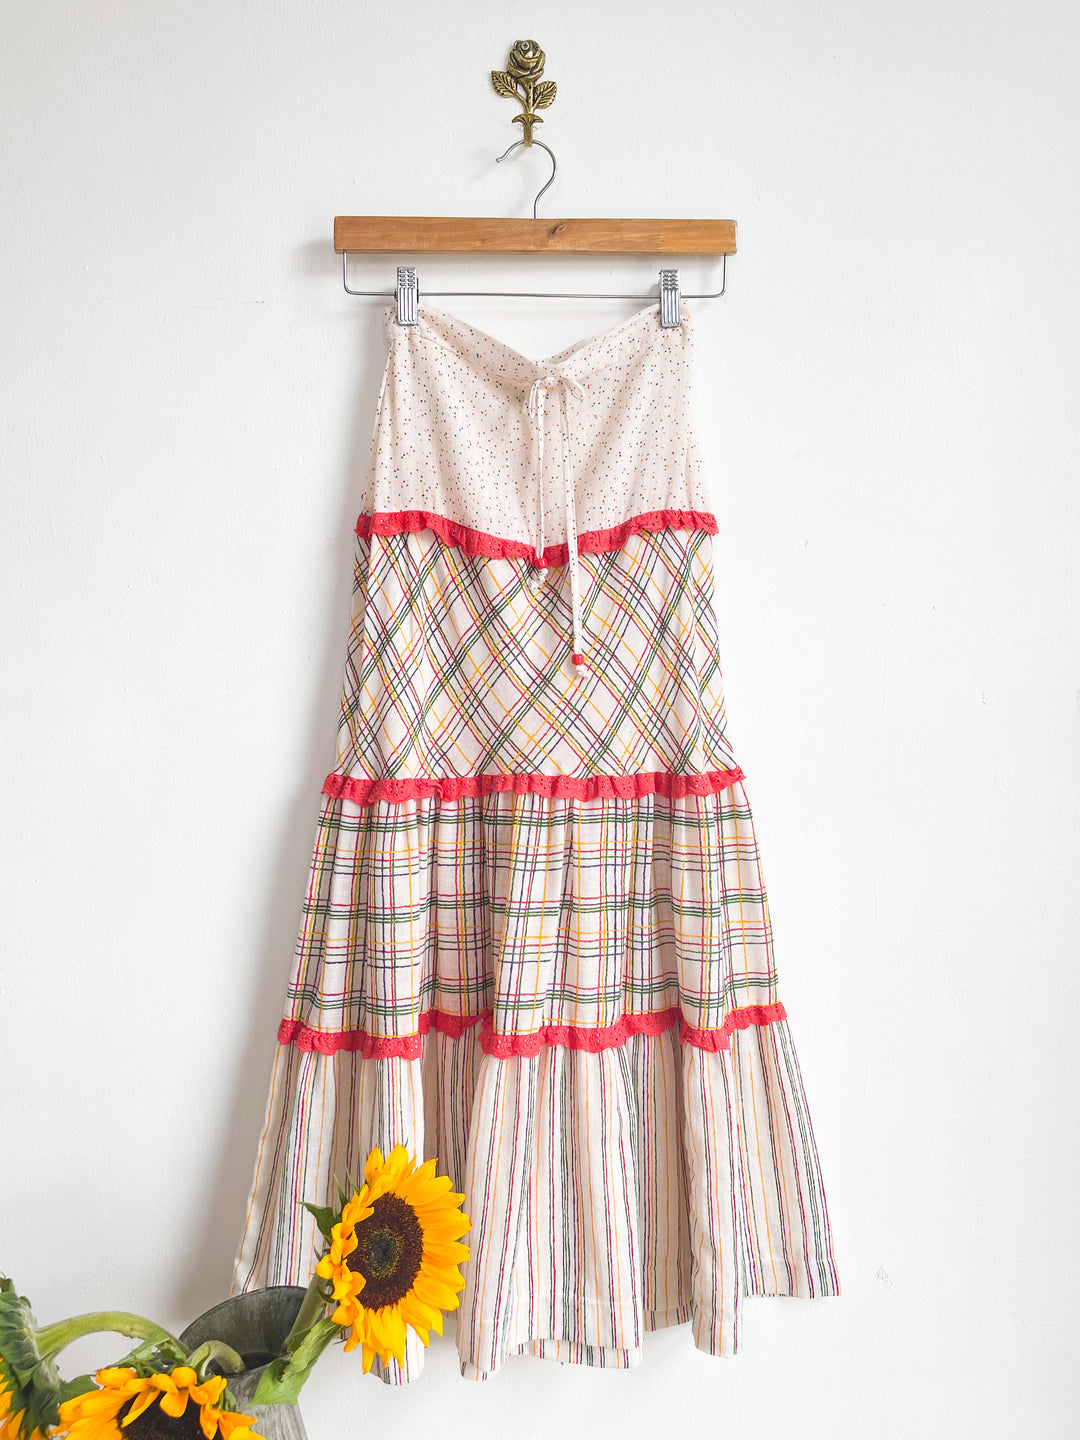 The Zinnia 70s skirt